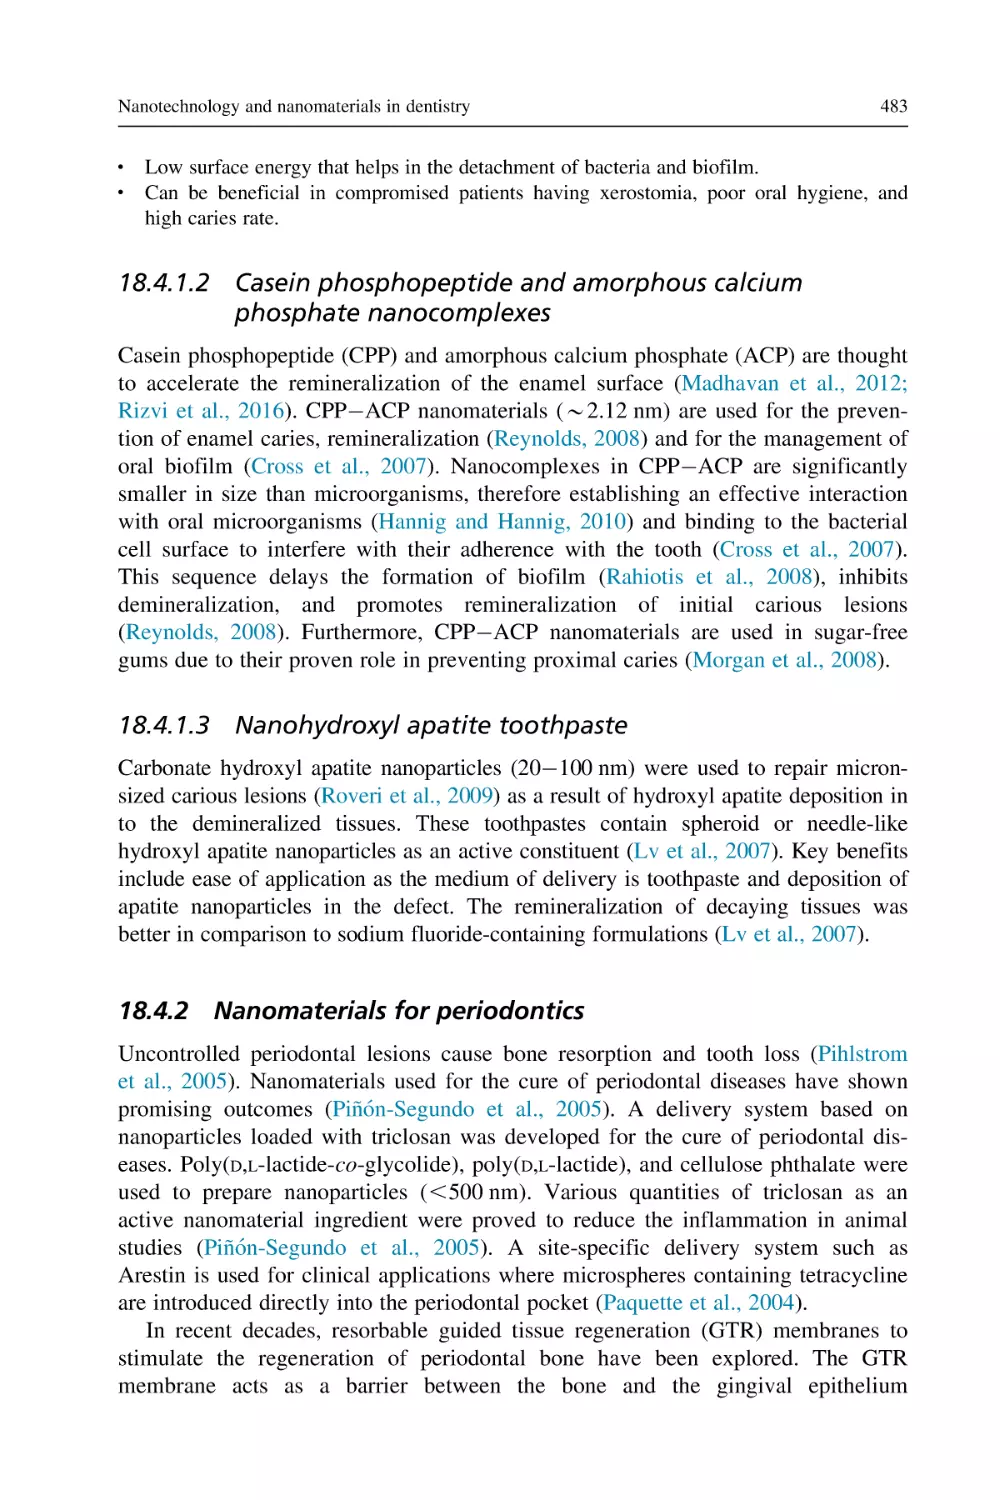 18.4.1.2 Casein phosphopeptide and amorphous calcium phosphate nanocomplexes
18.4.1.3 Nanohydroxyl apatite toothpaste
18.4.2 Nanomaterials for periodontics